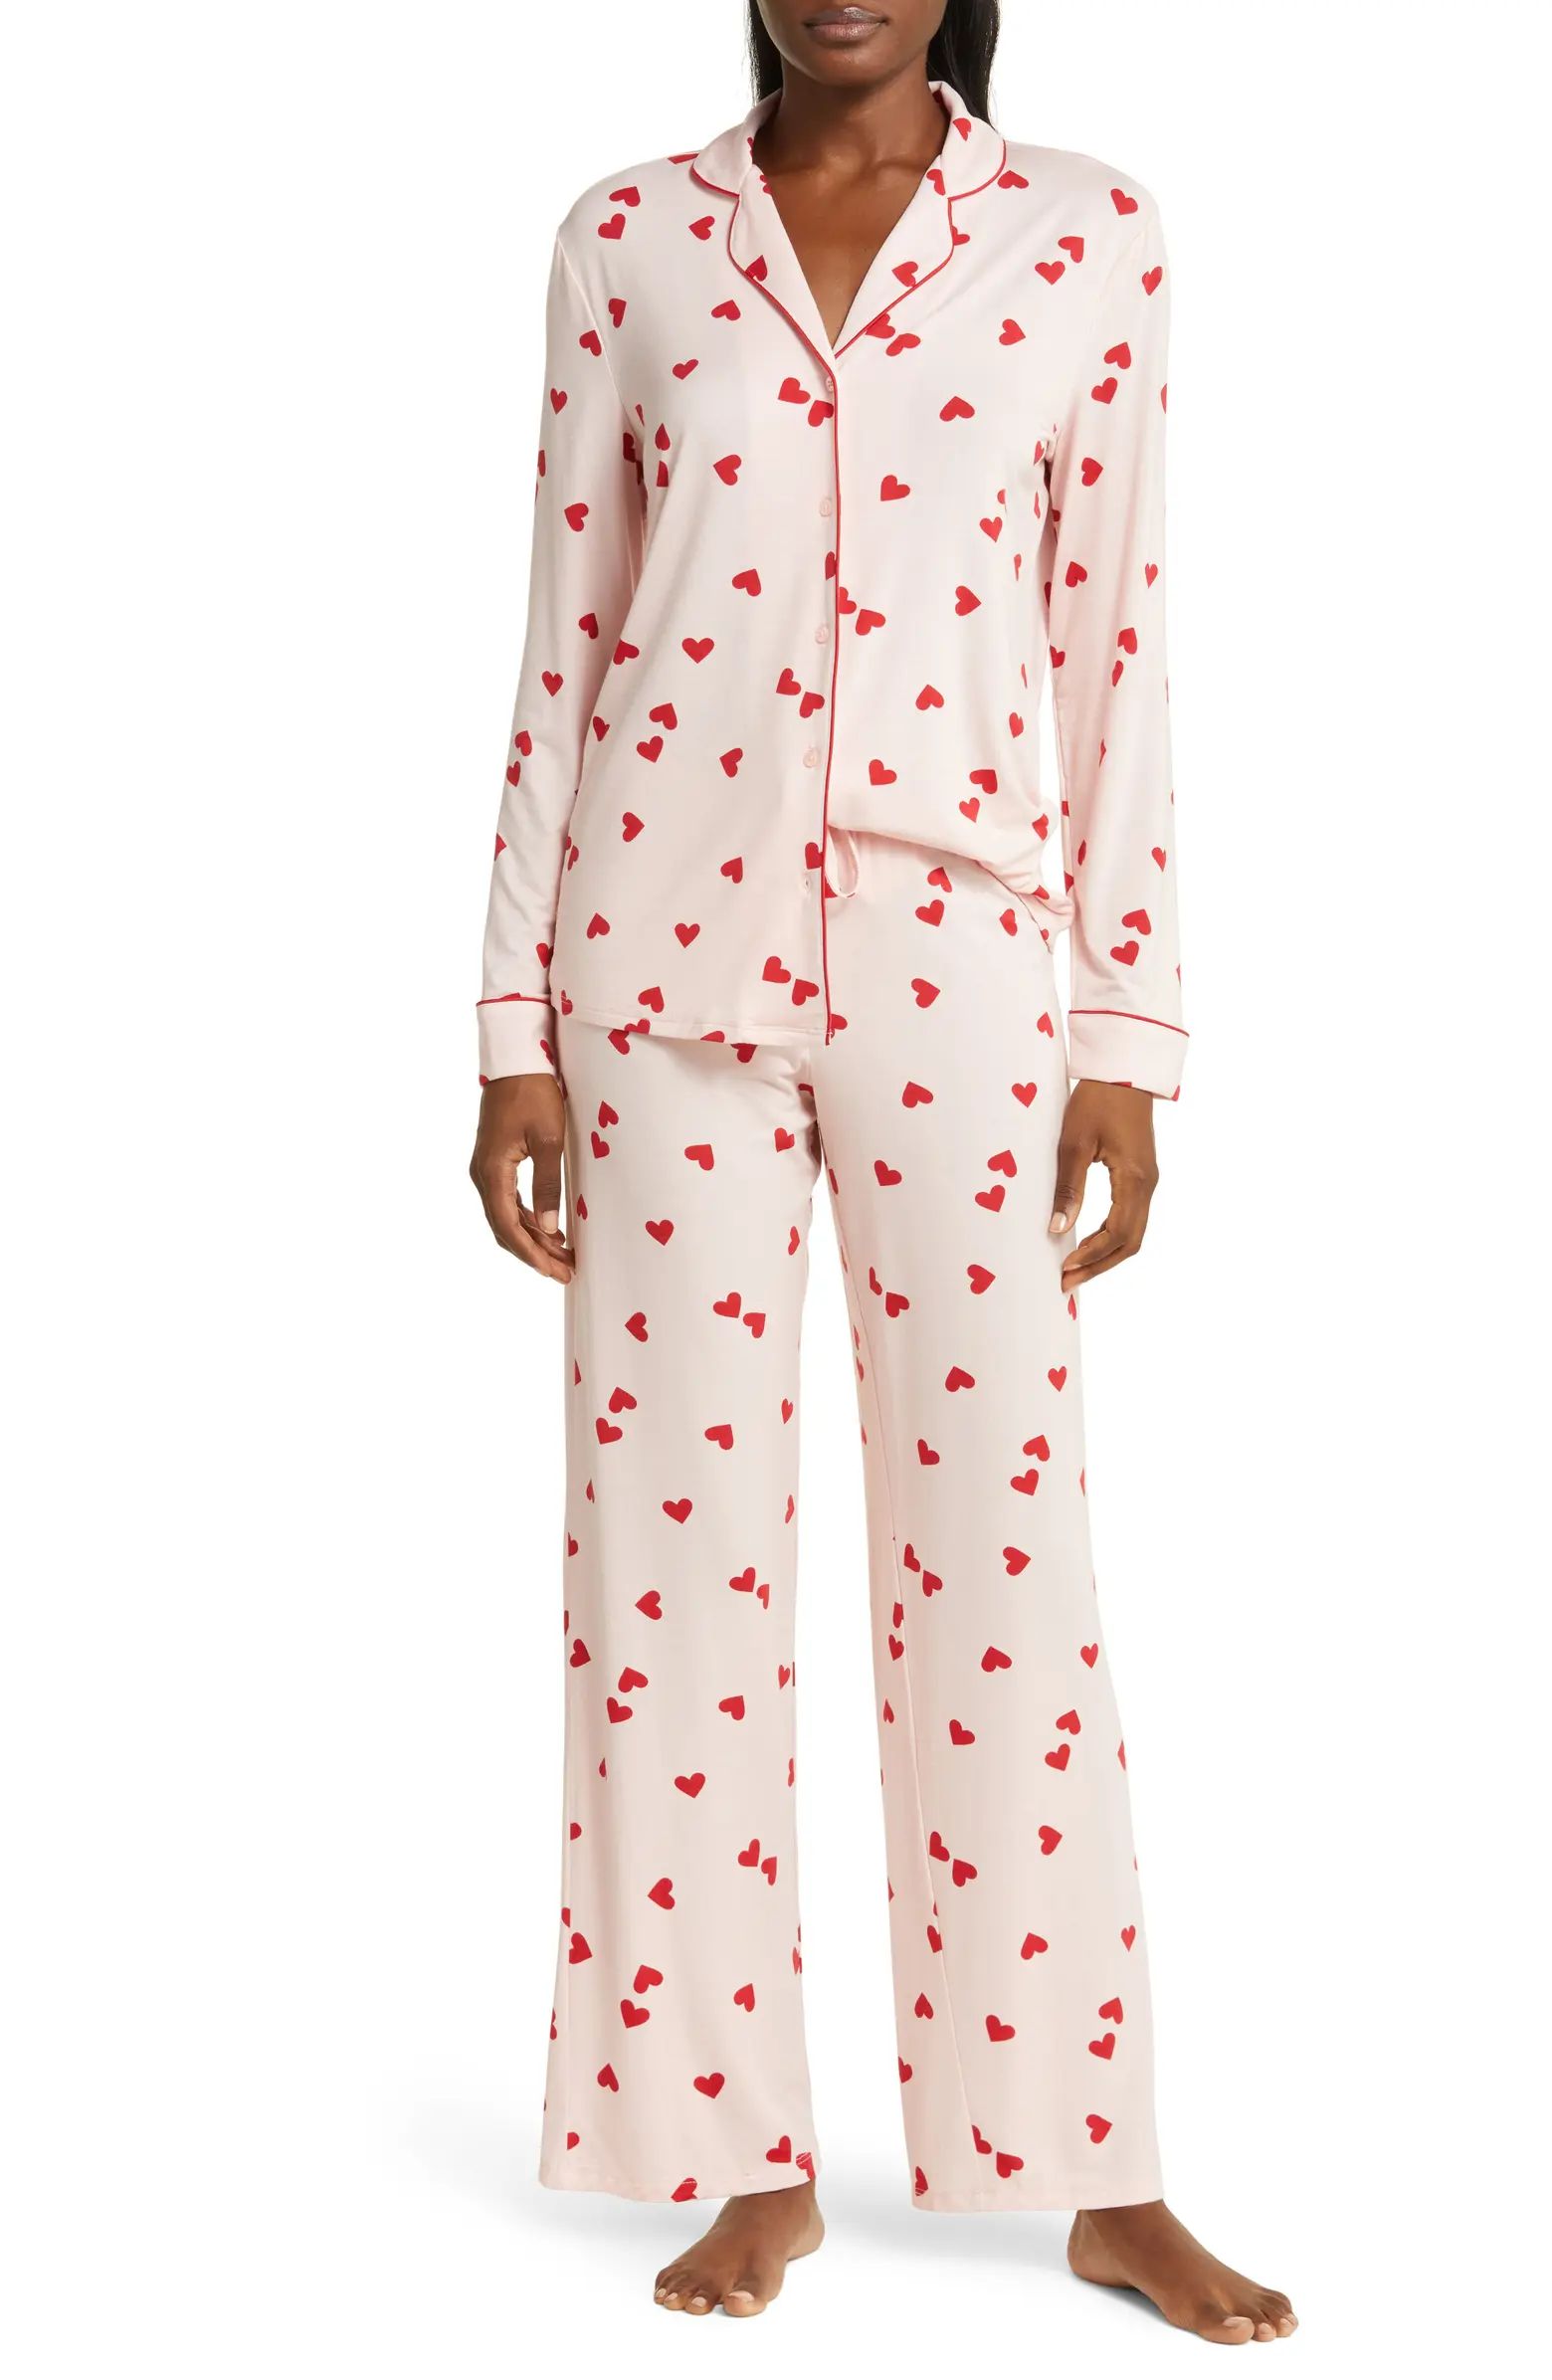 Moonlight Eco Long Sleeve Knit Pajamas | Nordstrom